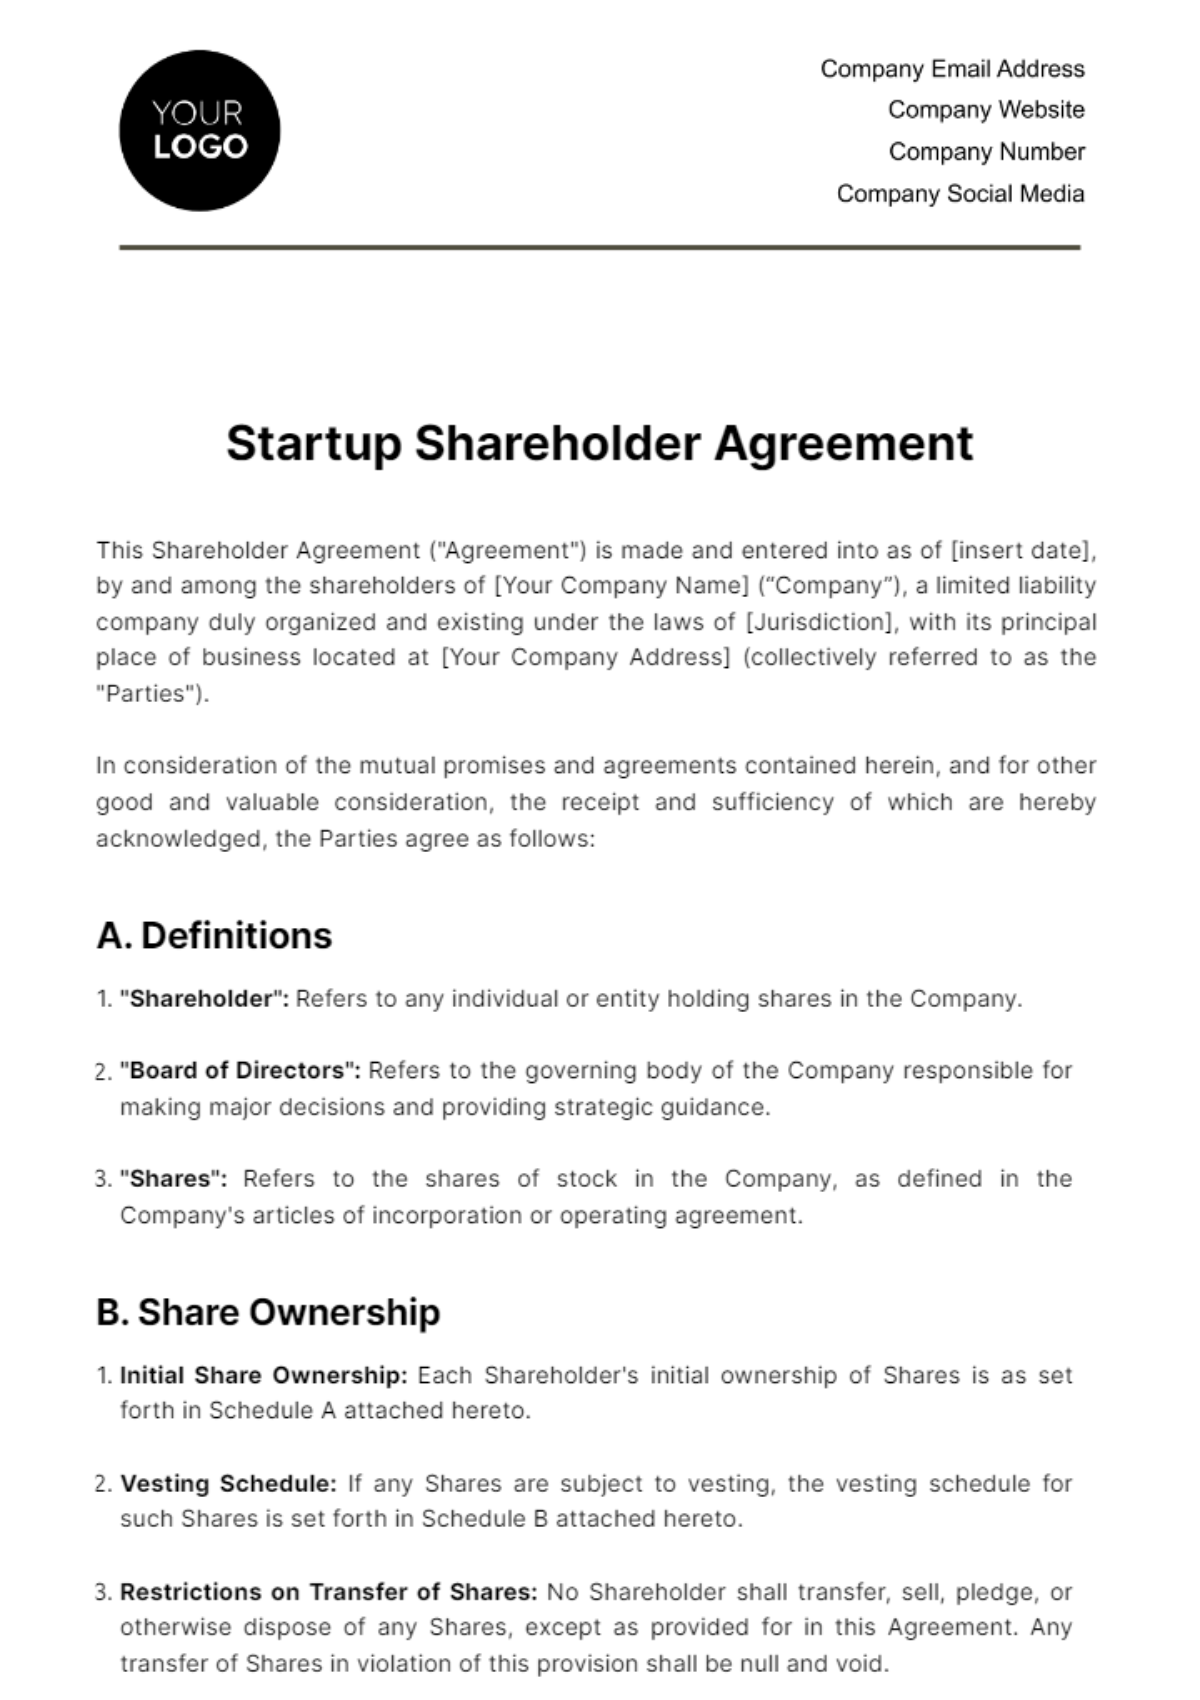 Free Startup Shareholder Agreement Template